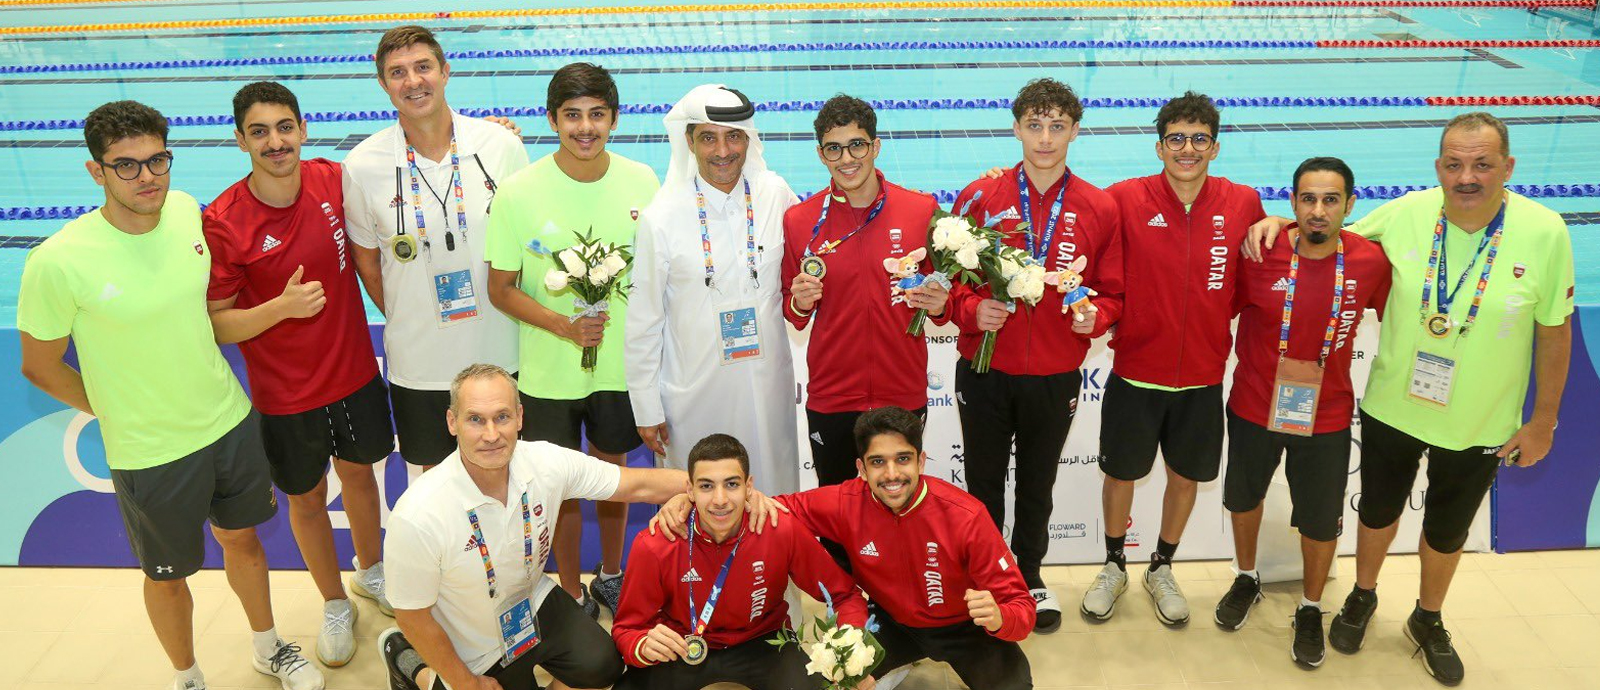 Qatar swimmers shine in Kuwait